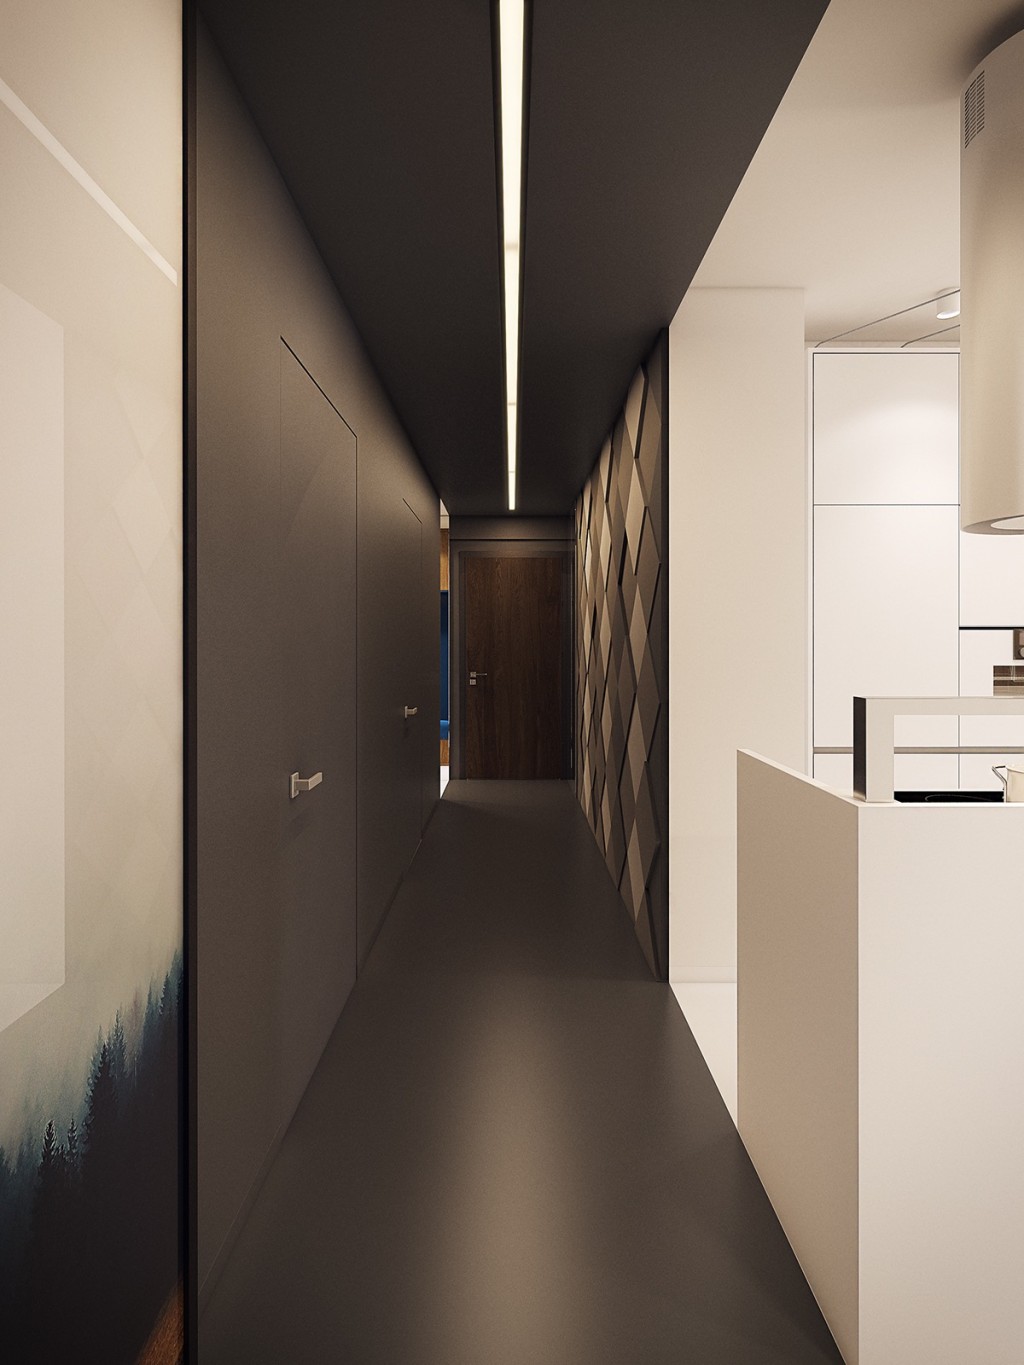 creative hallway walls | Interior Design Ideas